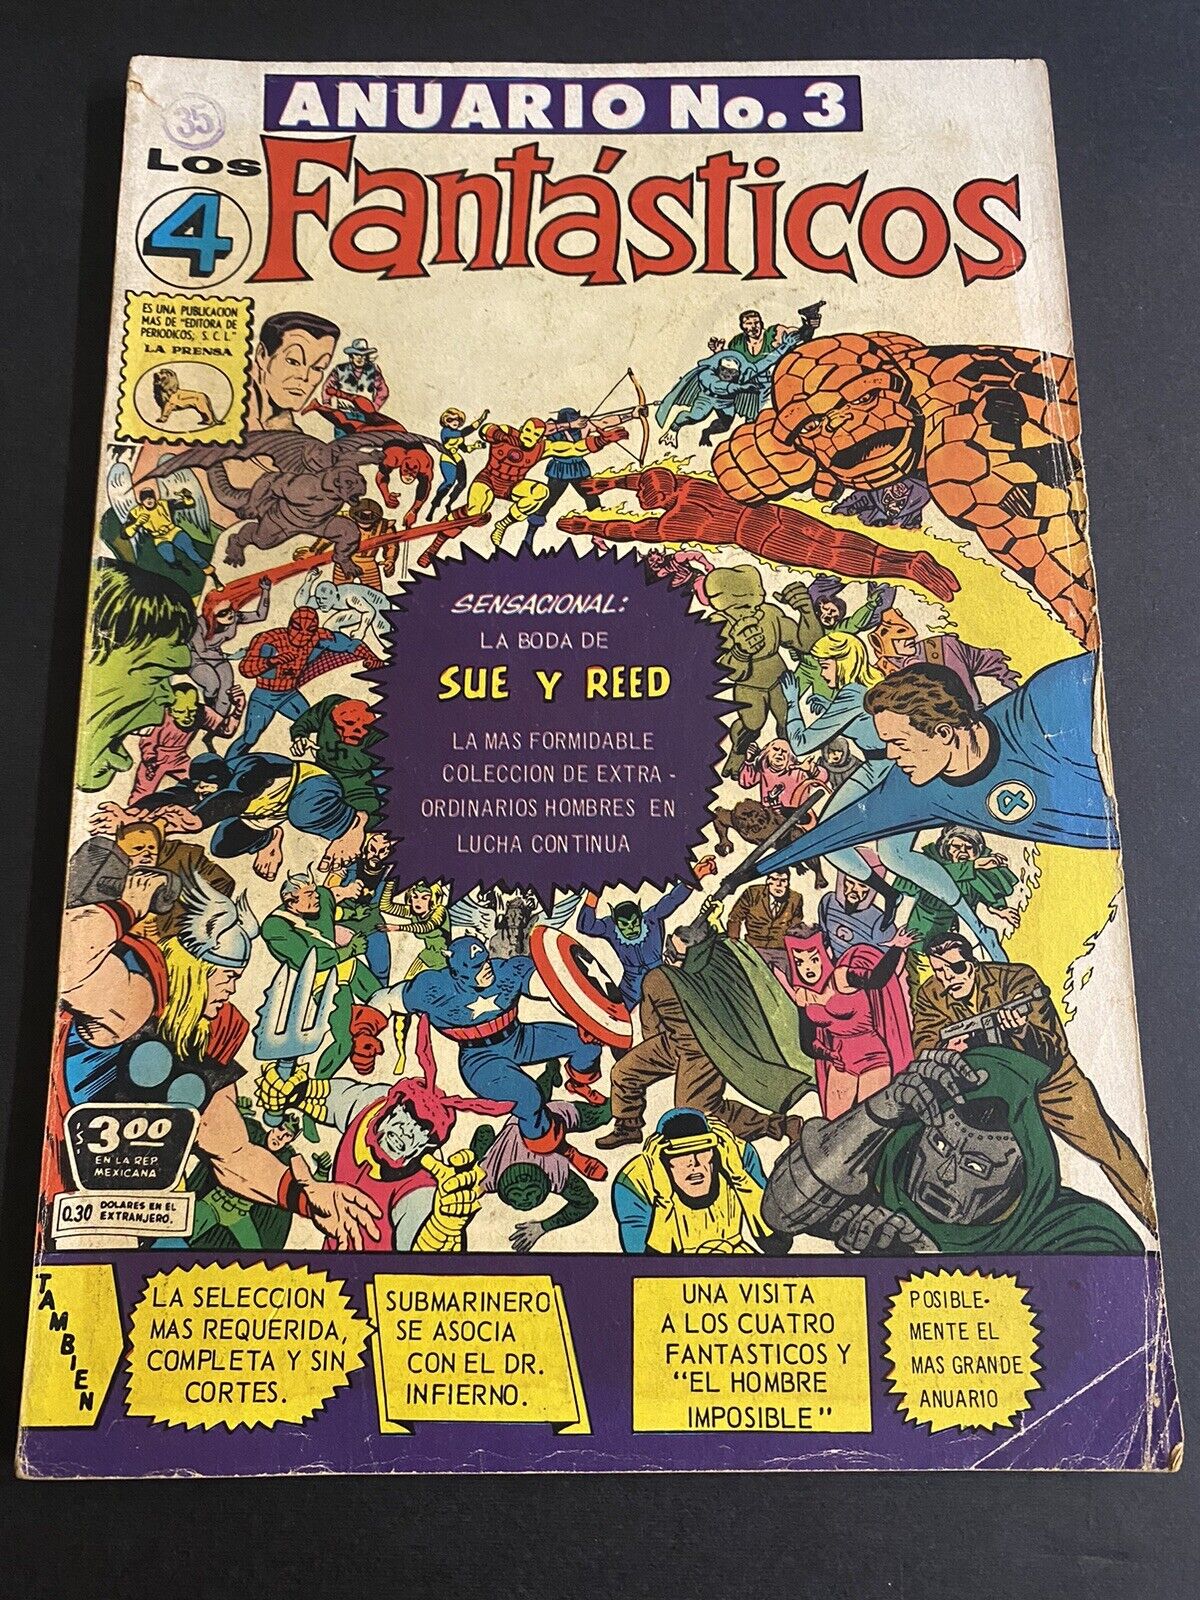 Los 4 Fantásticos Anuario 3, Extremely Rare Silver Age Mexican Fantastic Four.